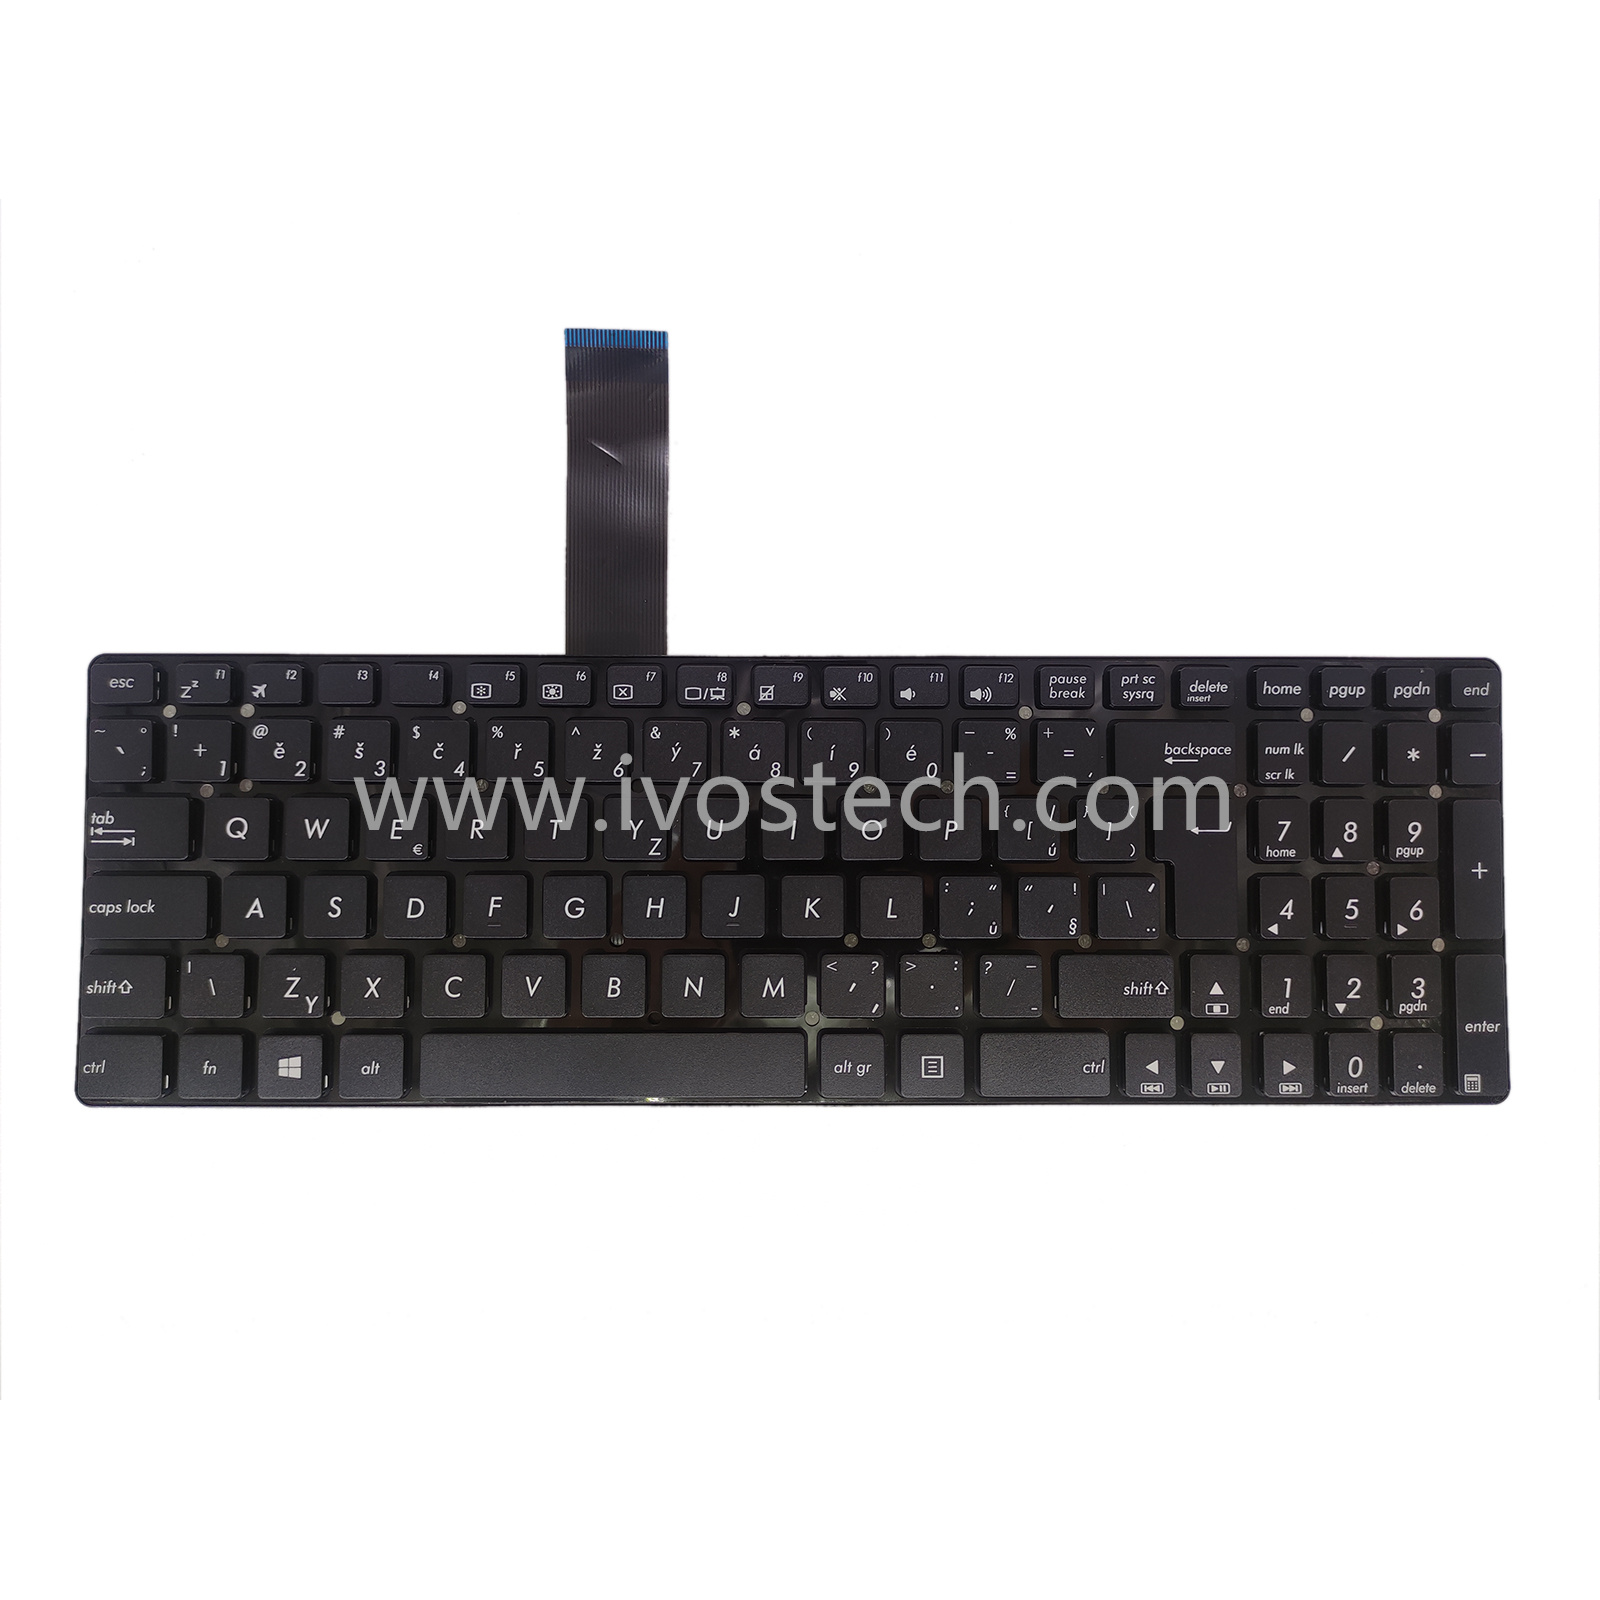 0KNB0-610KCZ00 Laptop Replacement Keyboard for ASUS X751 K55 K75 A55 – Czech Standard